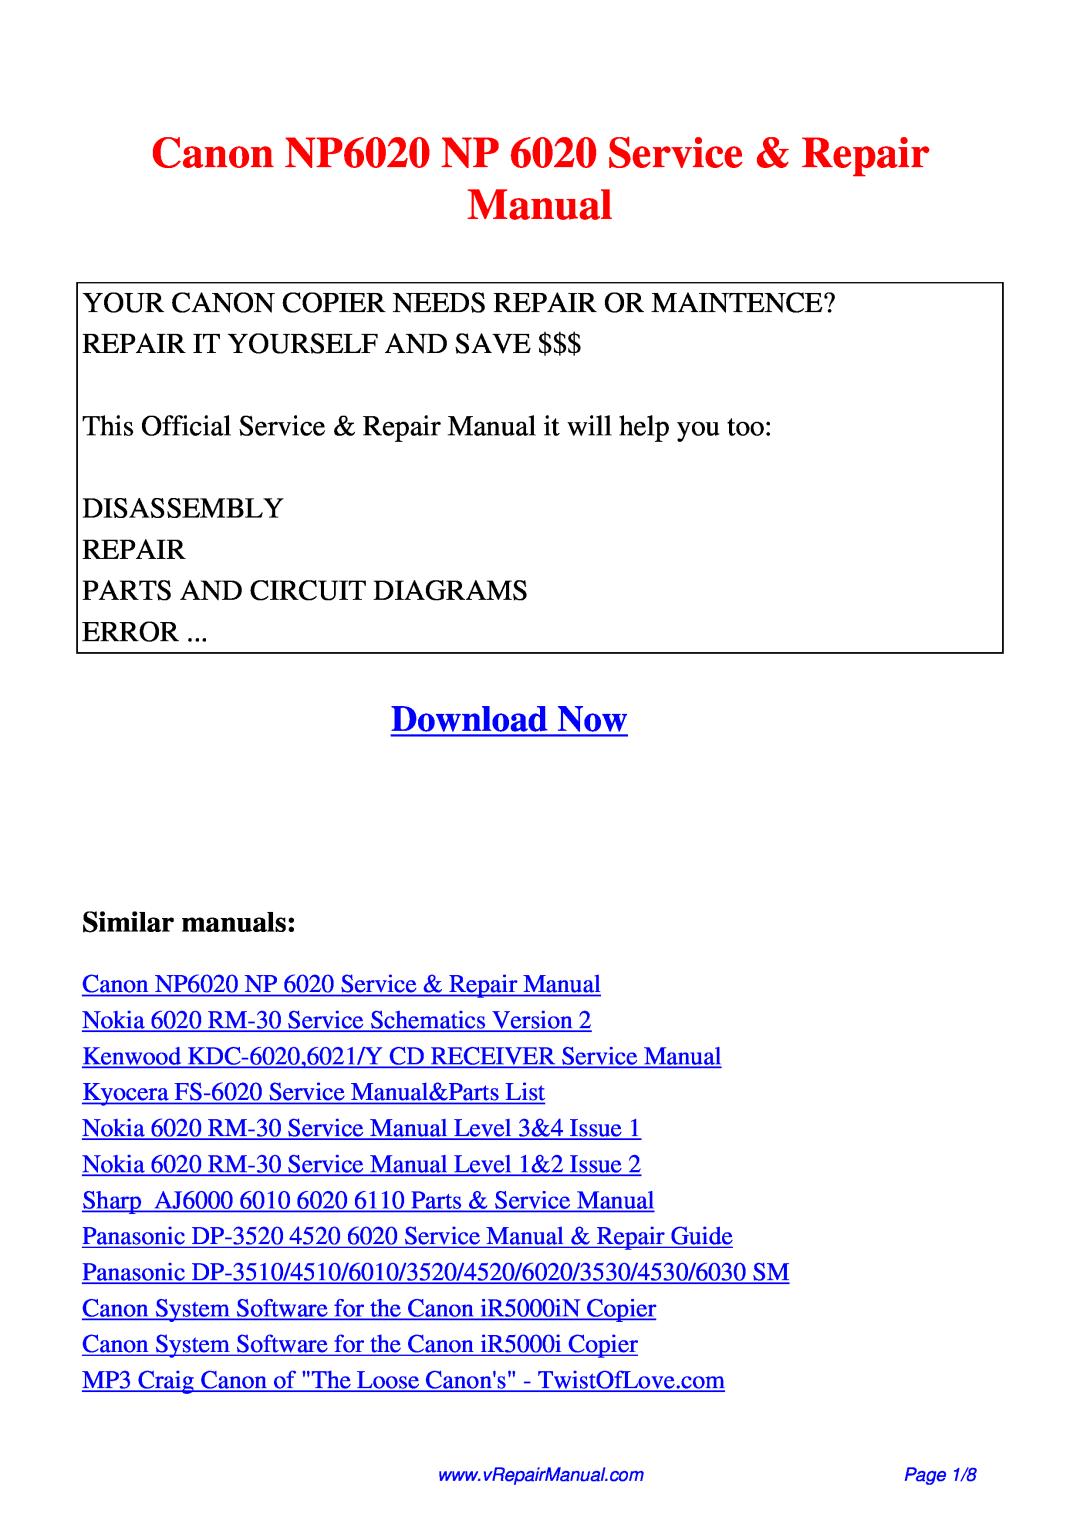 Canon service manual Canon NP6020 NP 6020 Service & Repair Manual, Download Now, Similar manuals 